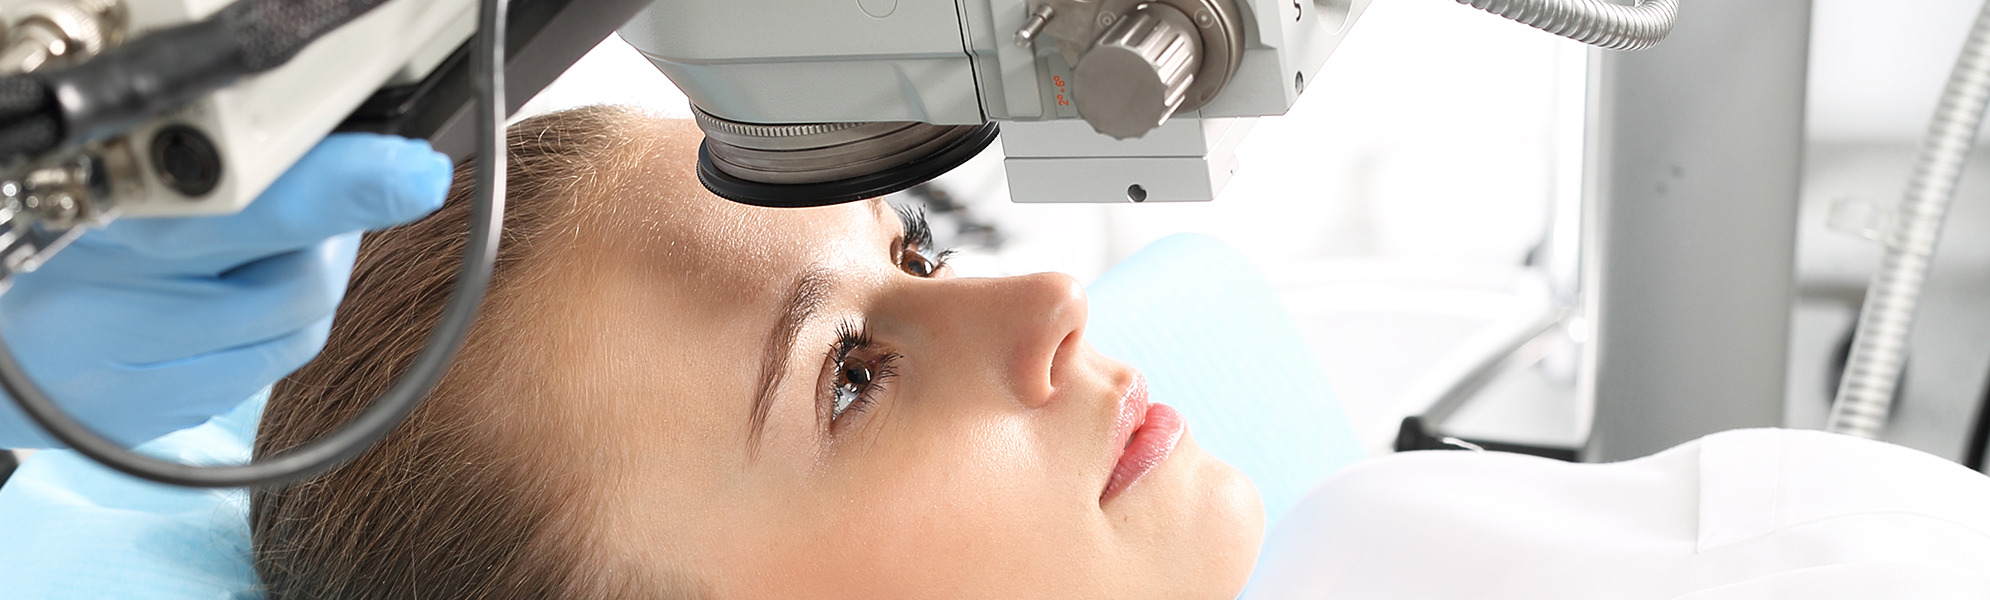 Ophthalmology and optics 